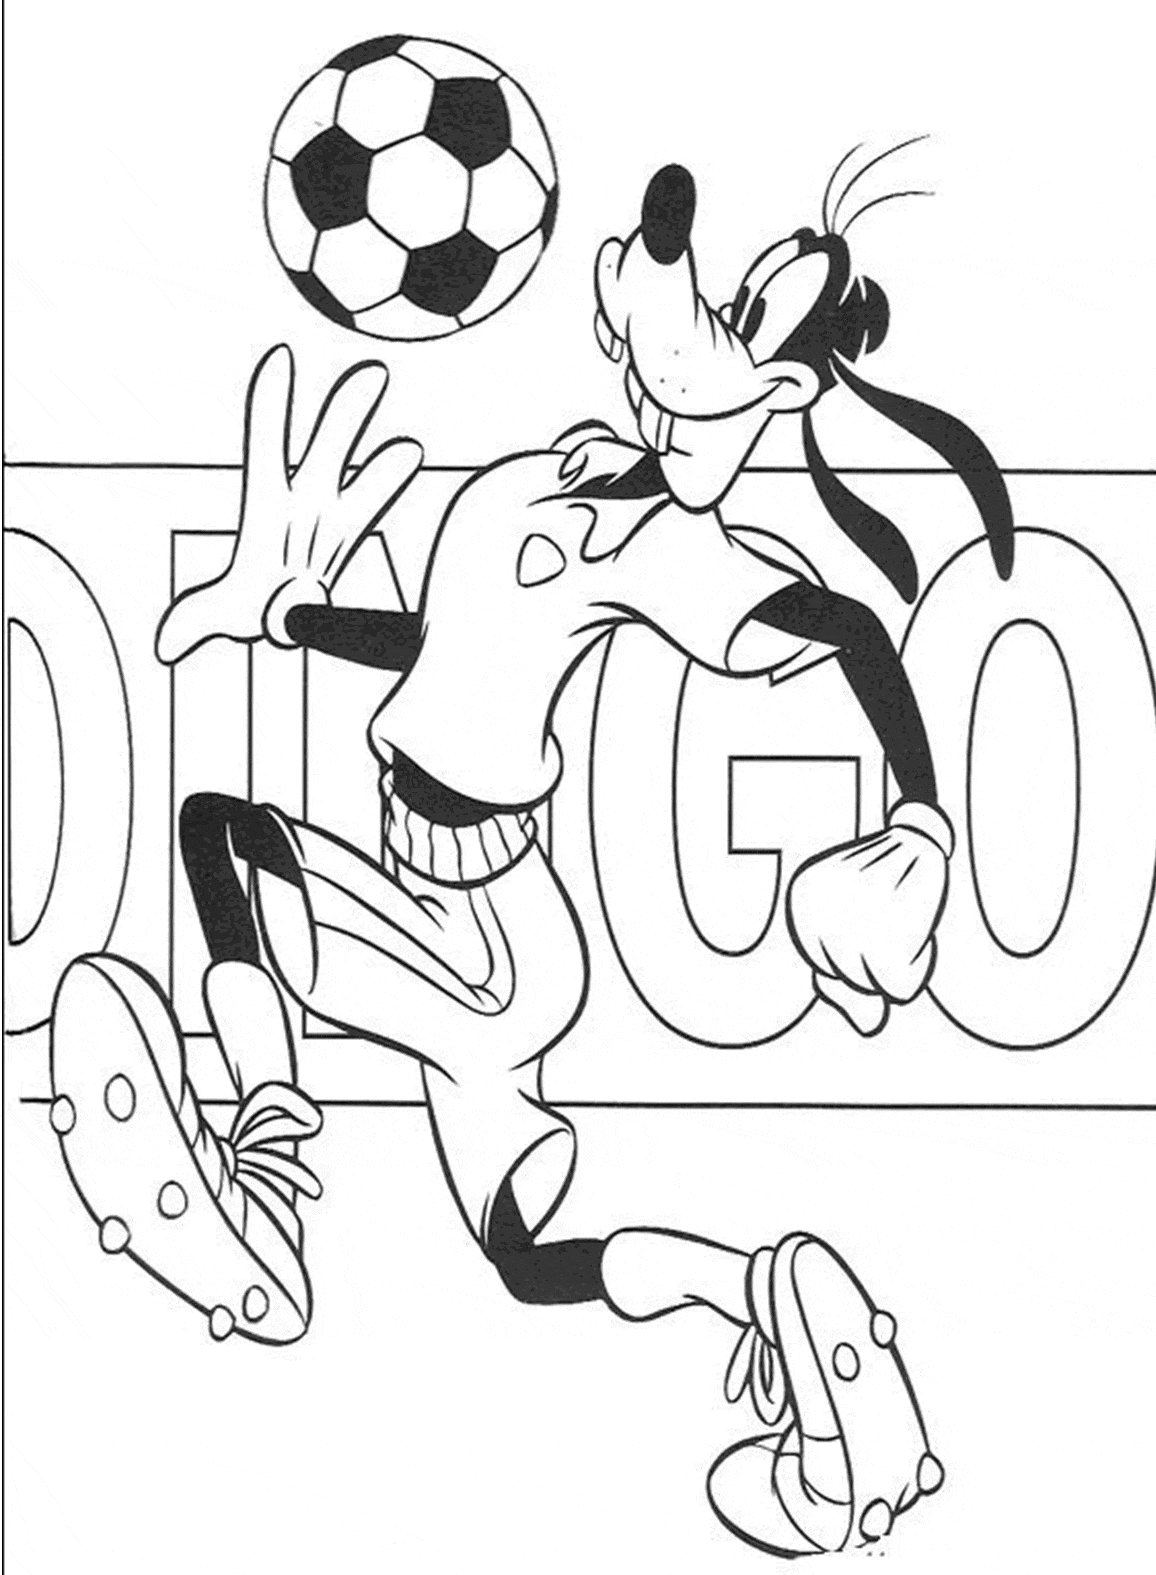 Goofy Playing Football